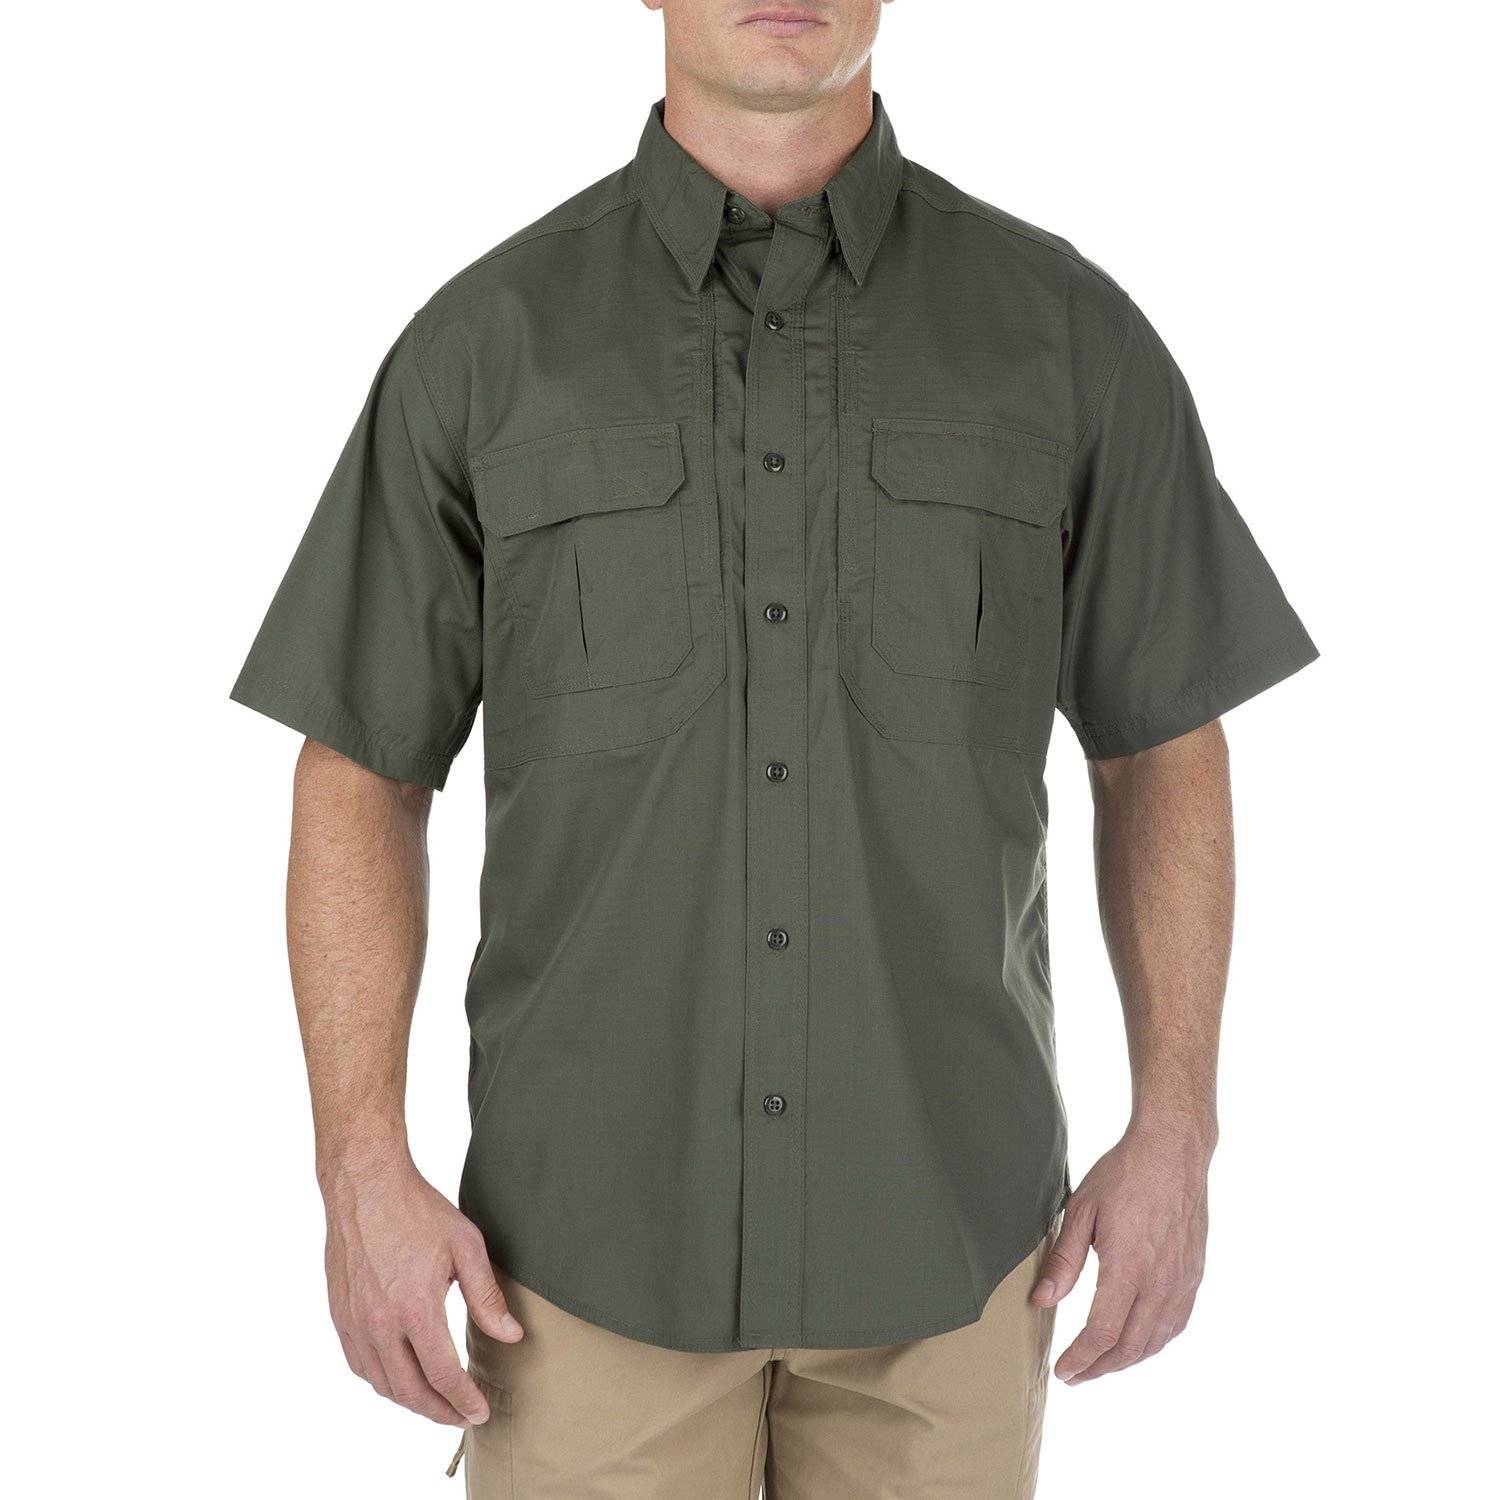 5.11 Tactical TacLite Pro Short Sleeve Shirt